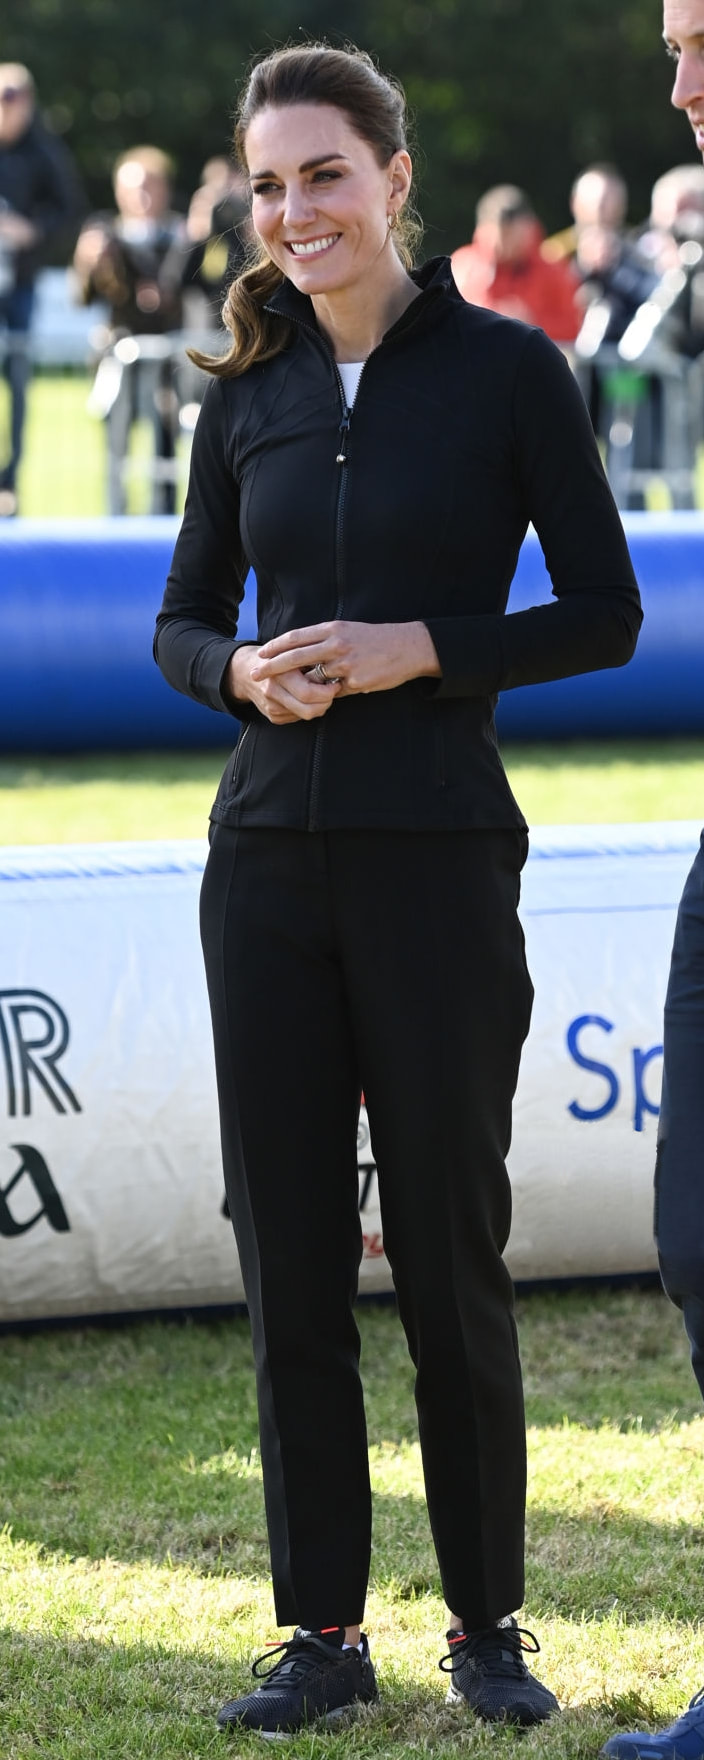 Lululemon Define Jacket in Black Luon as seen on Kate Middleton, The Duchess of Cambridge.